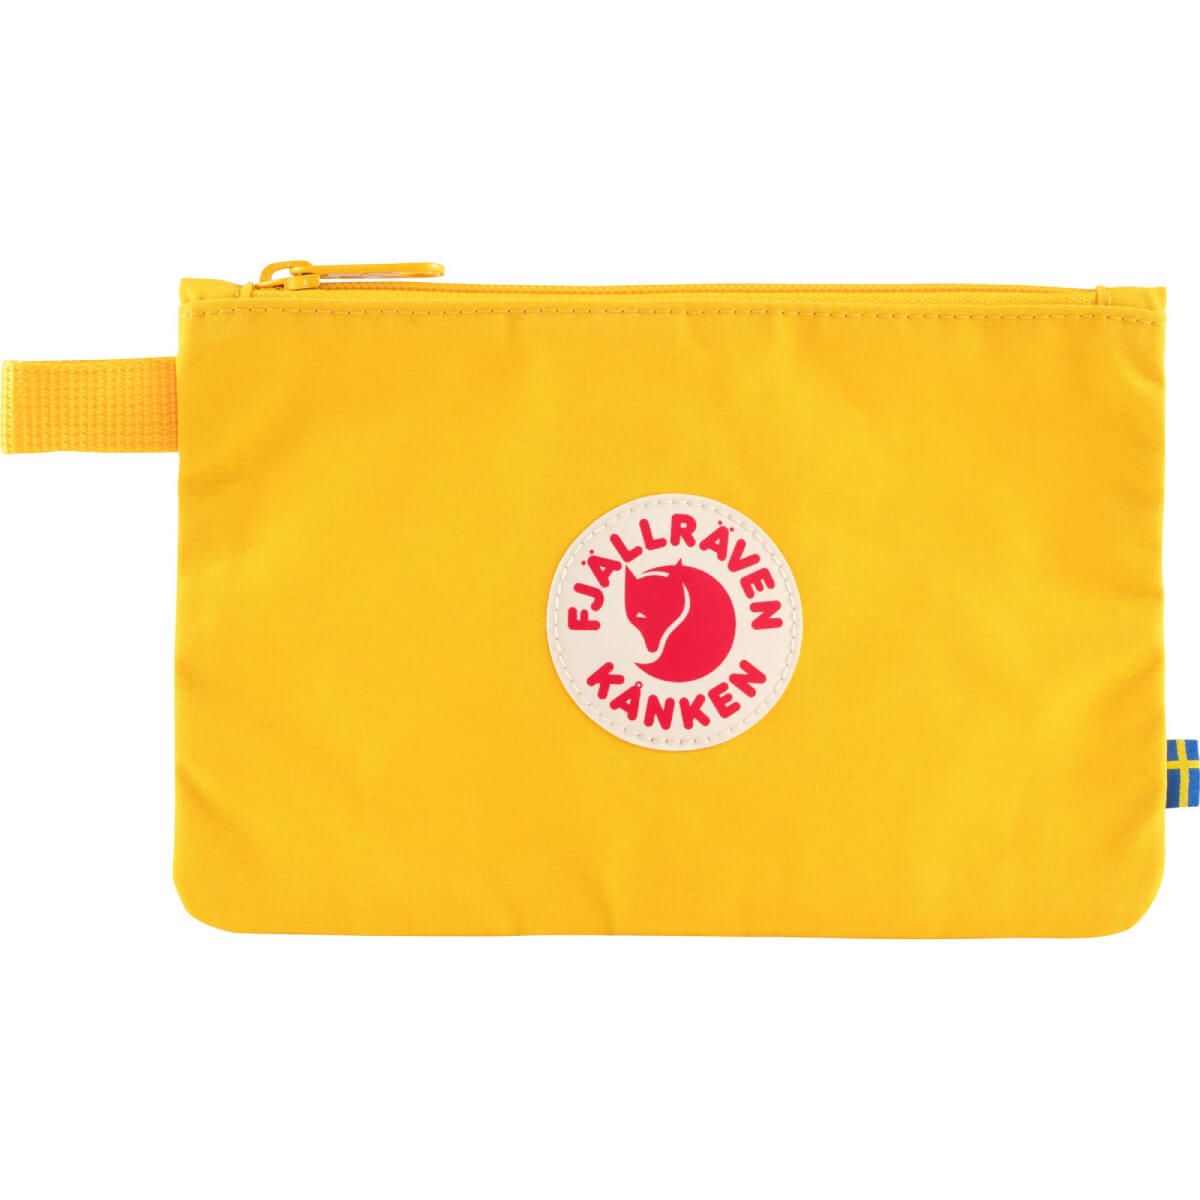 Компактная сумка Fjallraven Kanken Gear Pocket Warm Yellow 25863.141